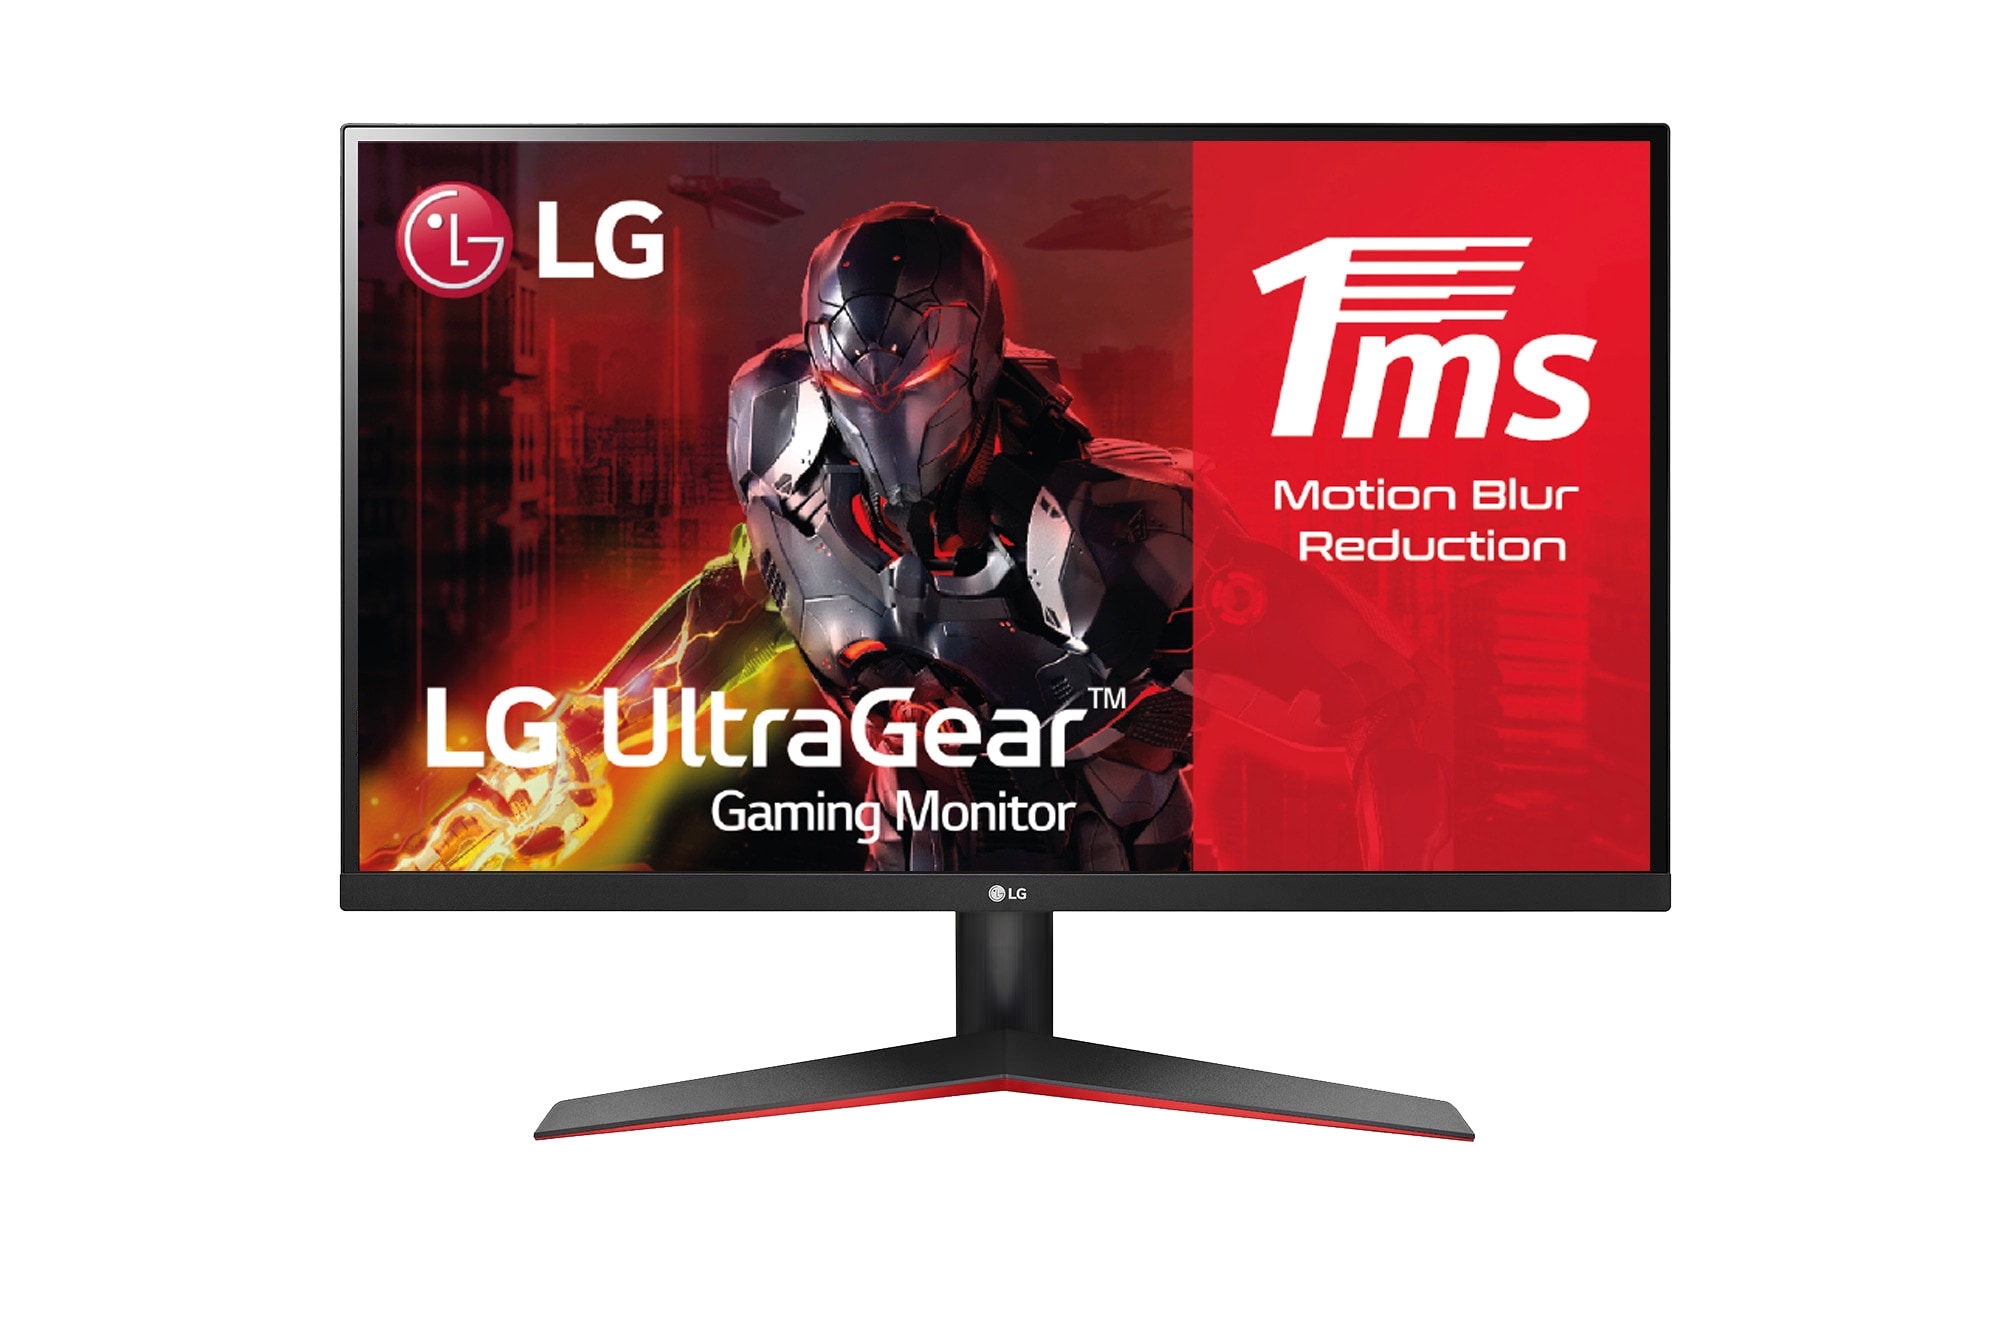 LG 27MP60G-B - Monitor Gaming LG UltraGear™ (1920x1080p, 250cd/m², 1000:1, 1ms MBR, NTSC 72%); diag. 60,4cm; entradas: D-Sub x1, HDMI x1, DP x1; FreeSync™, 27MP60G-B, 27MP60G-B